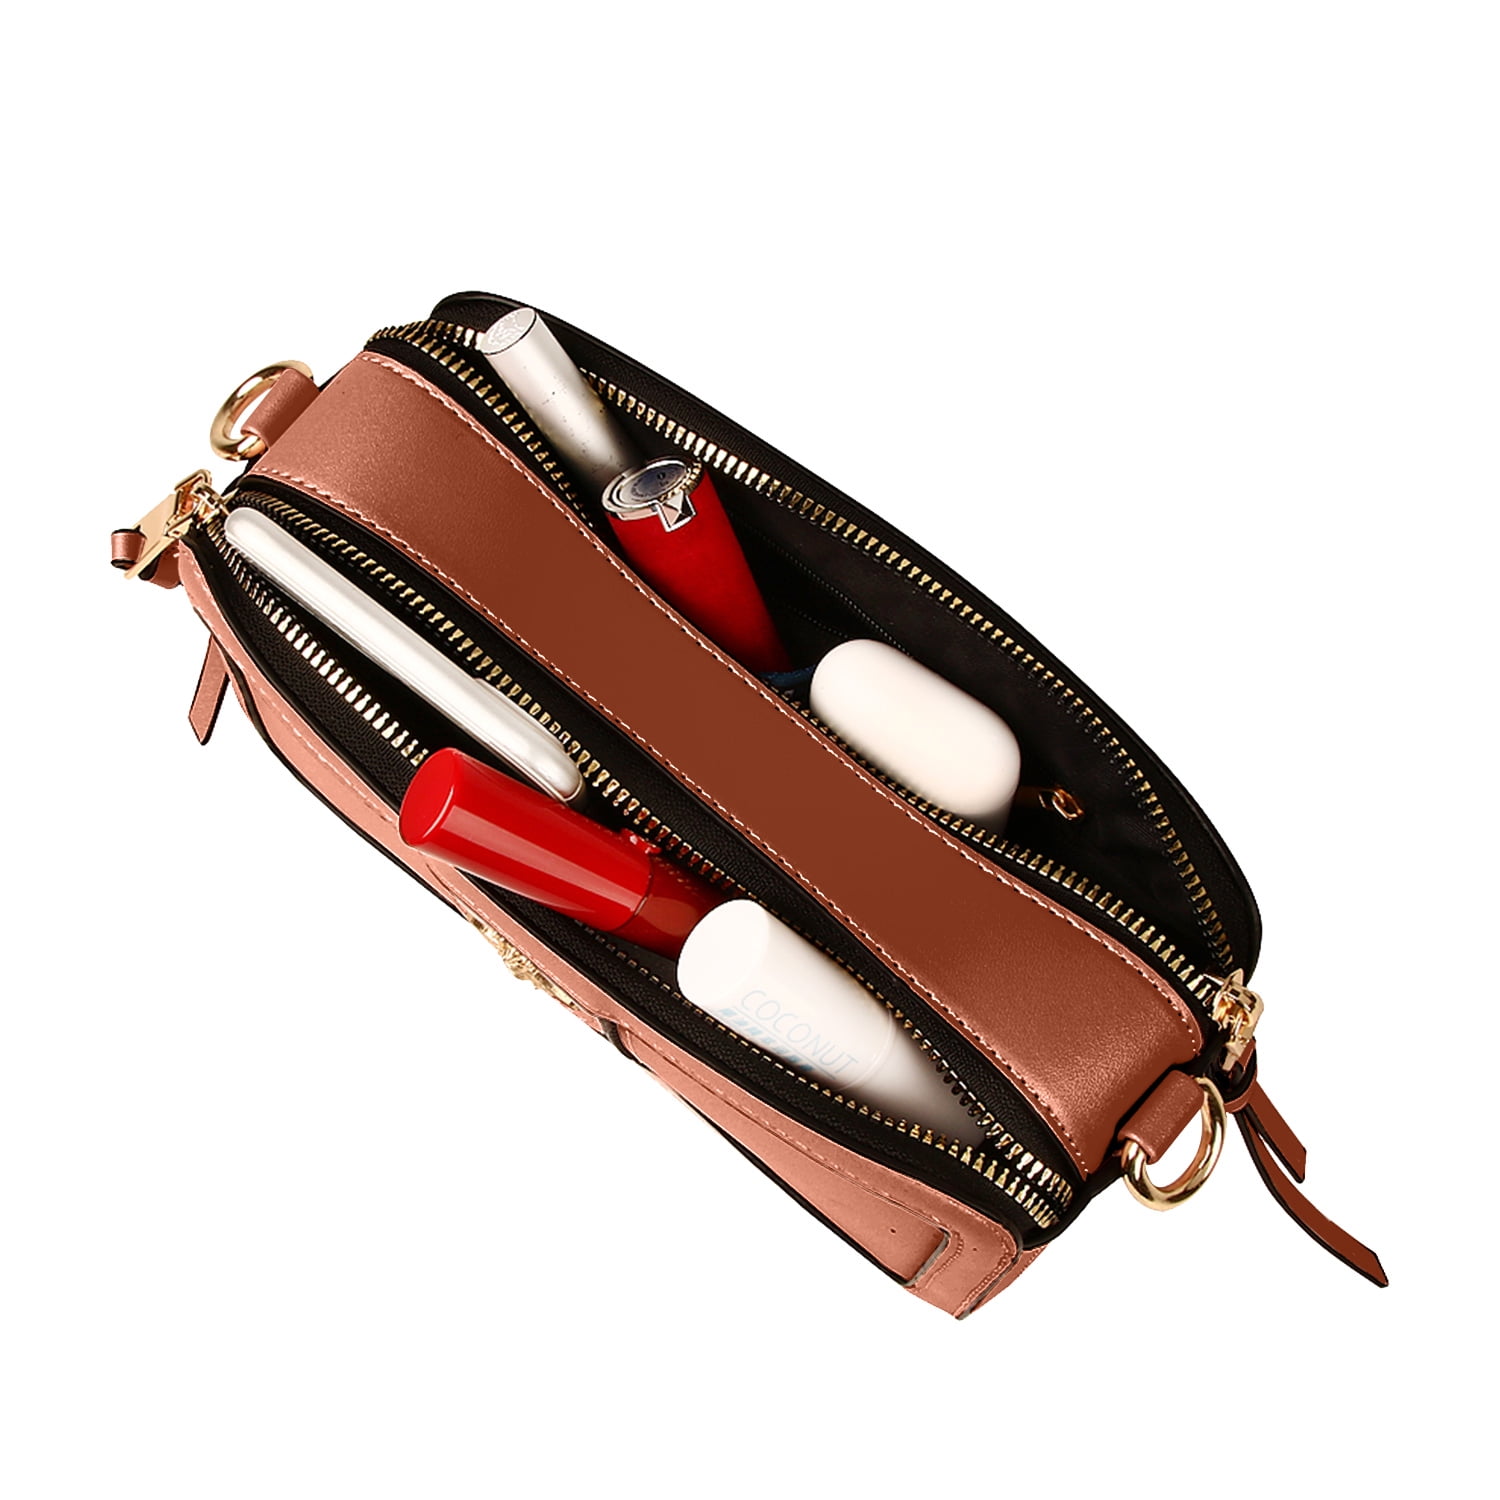 Ophlid Bee Purse Camera Crossbody Bags for Women Trendy Small Snapshot Bag  Wide Strap Leather Shoulder Clutch Handbags Black: Handbags